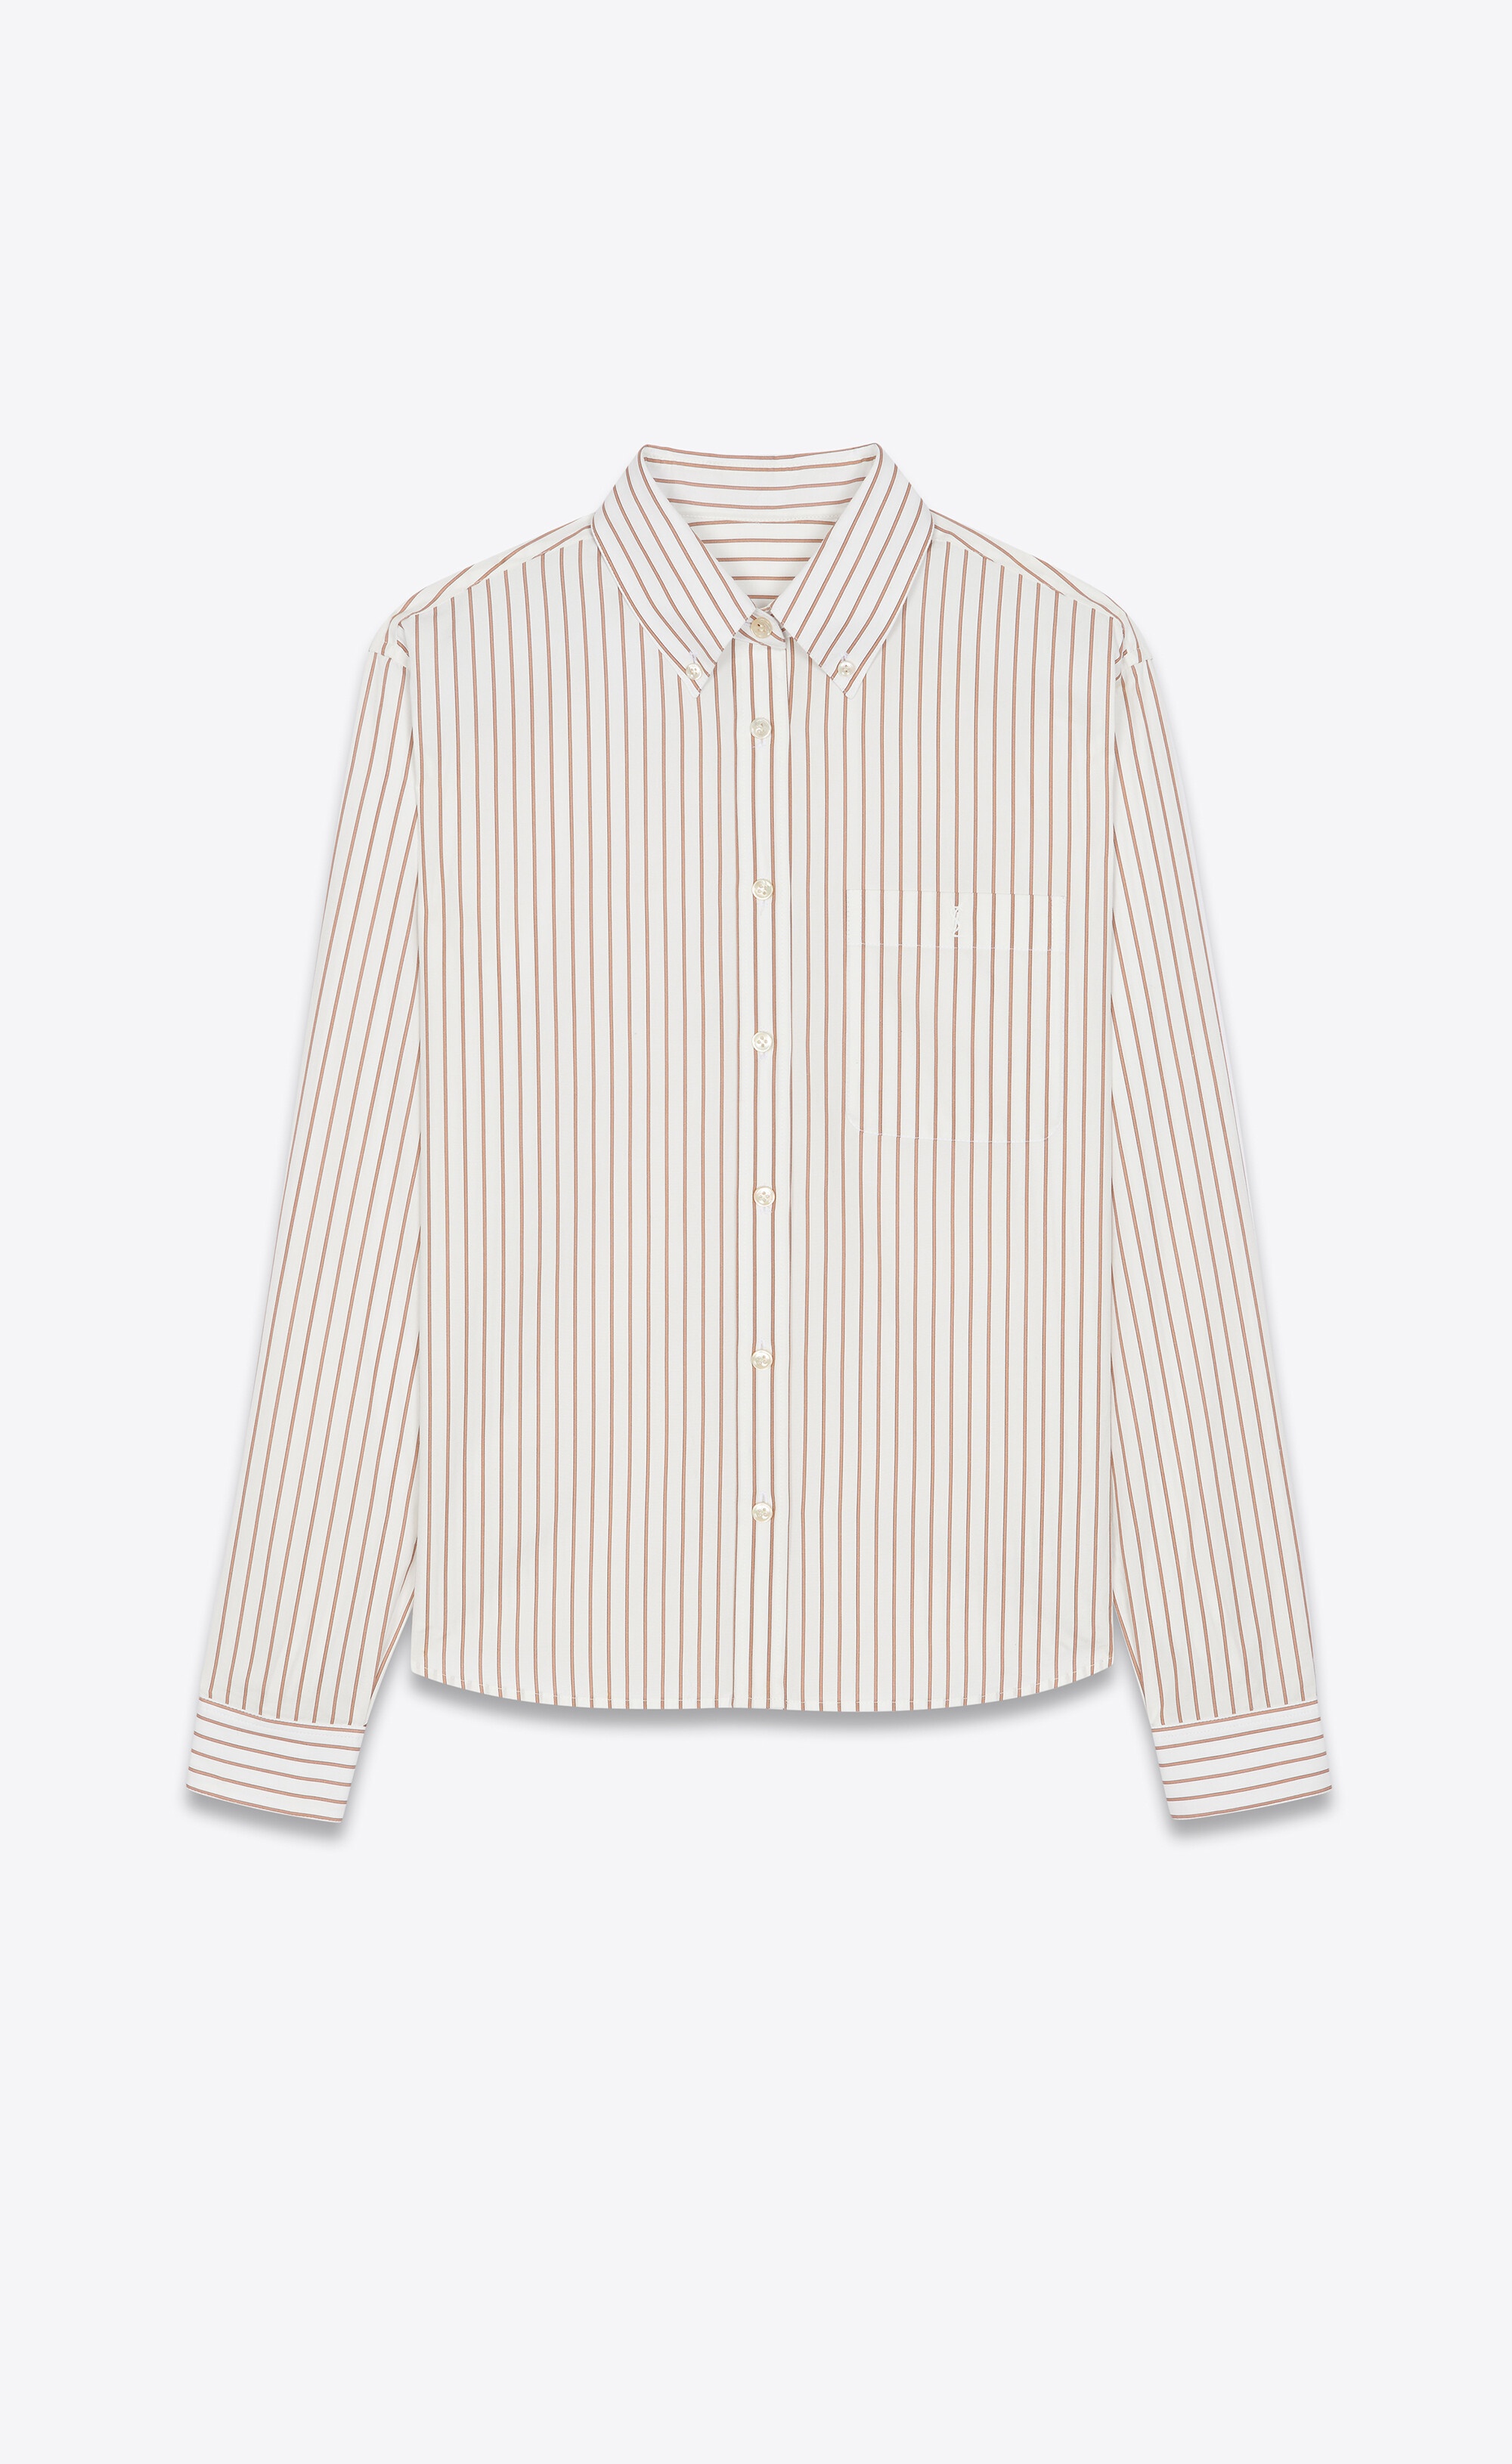 monogram shirt in striped cotton poplin - 1